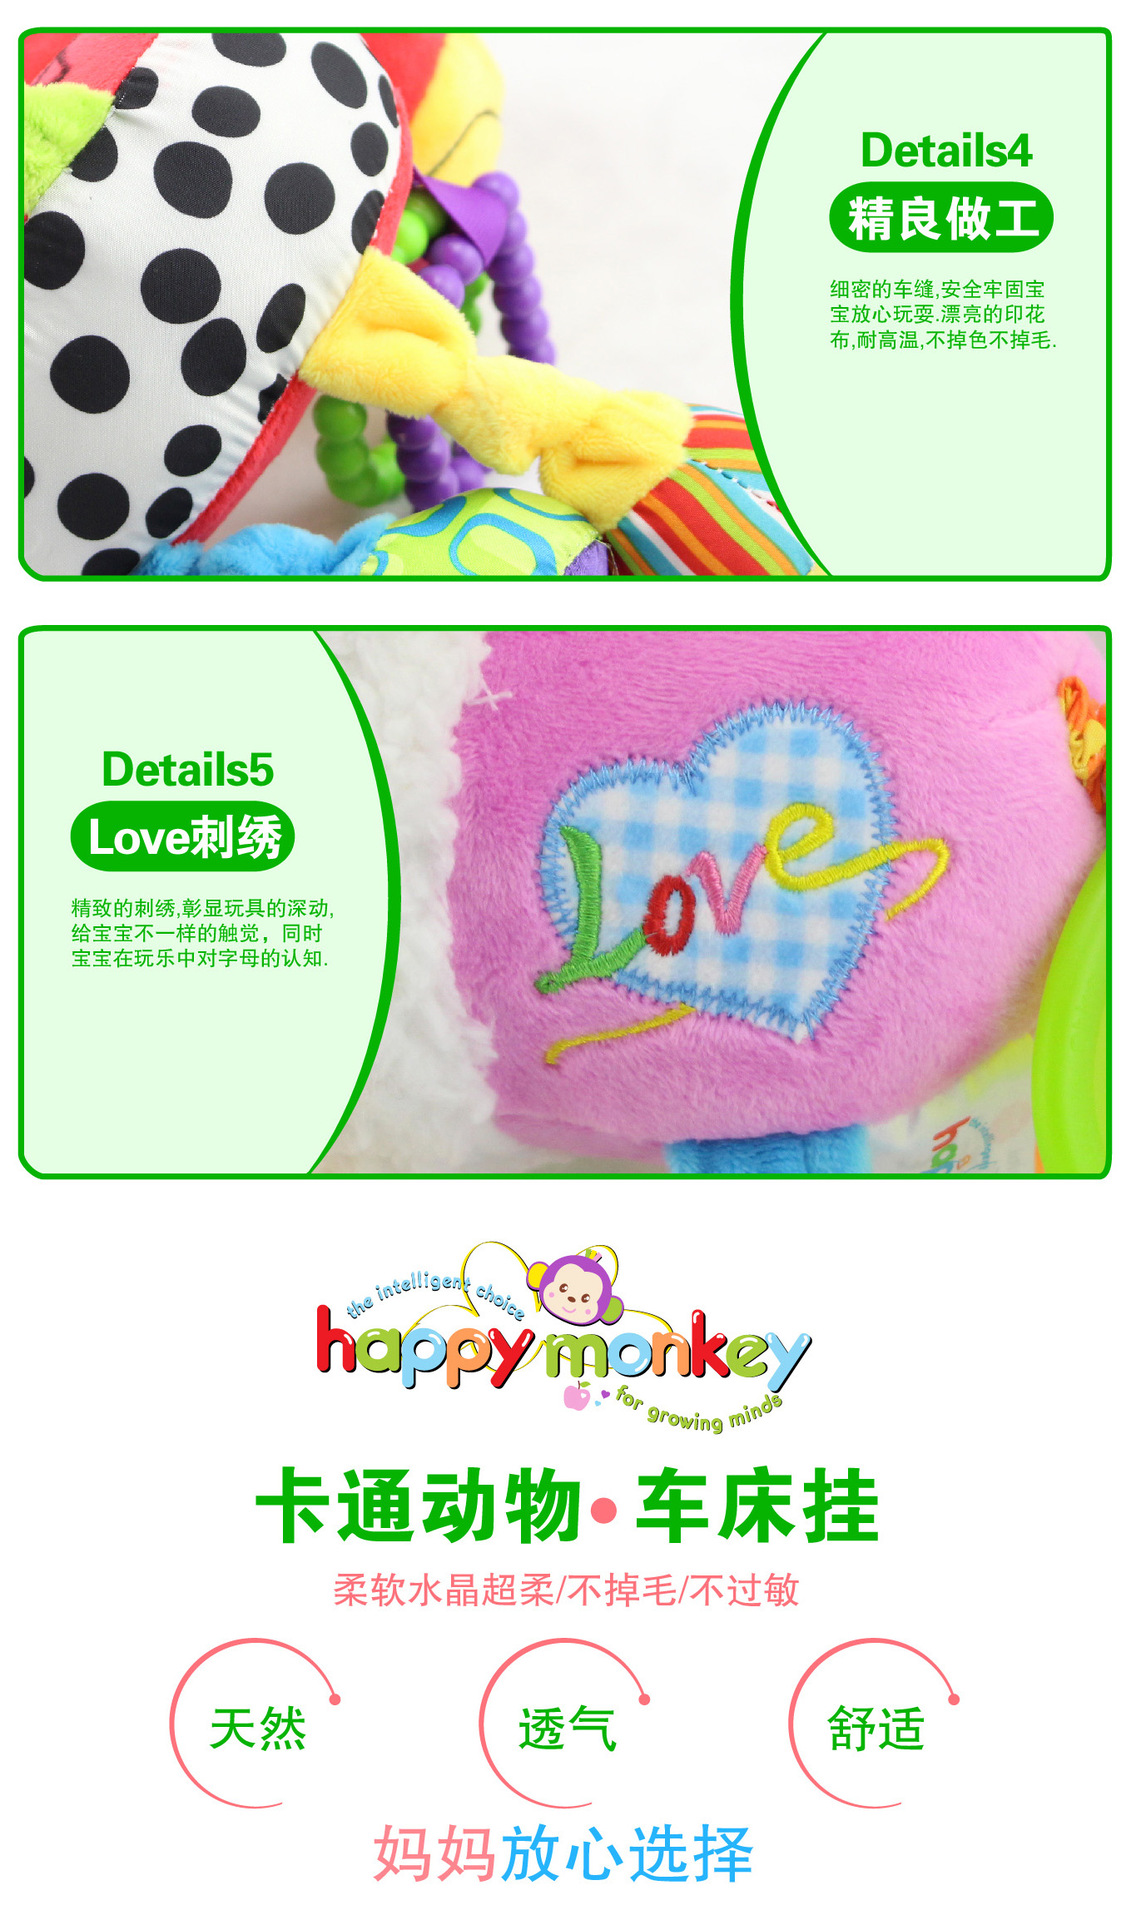 HAPPY MONKEY 新款大象车床挂摇铃安抚玩具婴幼儿益智毛绒玩具示例图5